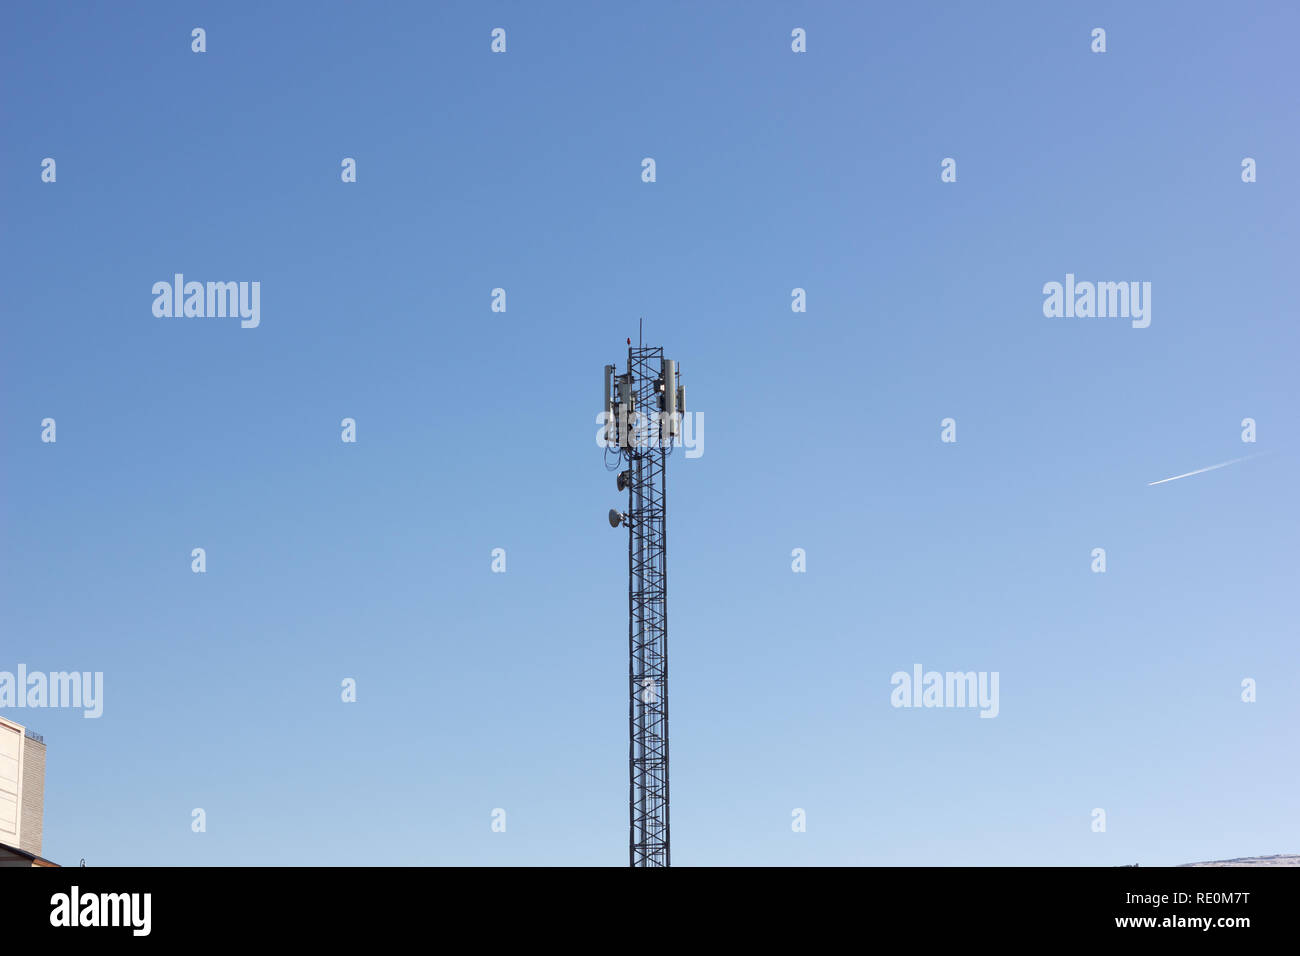 A mobile (or cellular) phone base transceiver station antenna array at Urmia, West Azerbaijan province, Iran Stock Photo